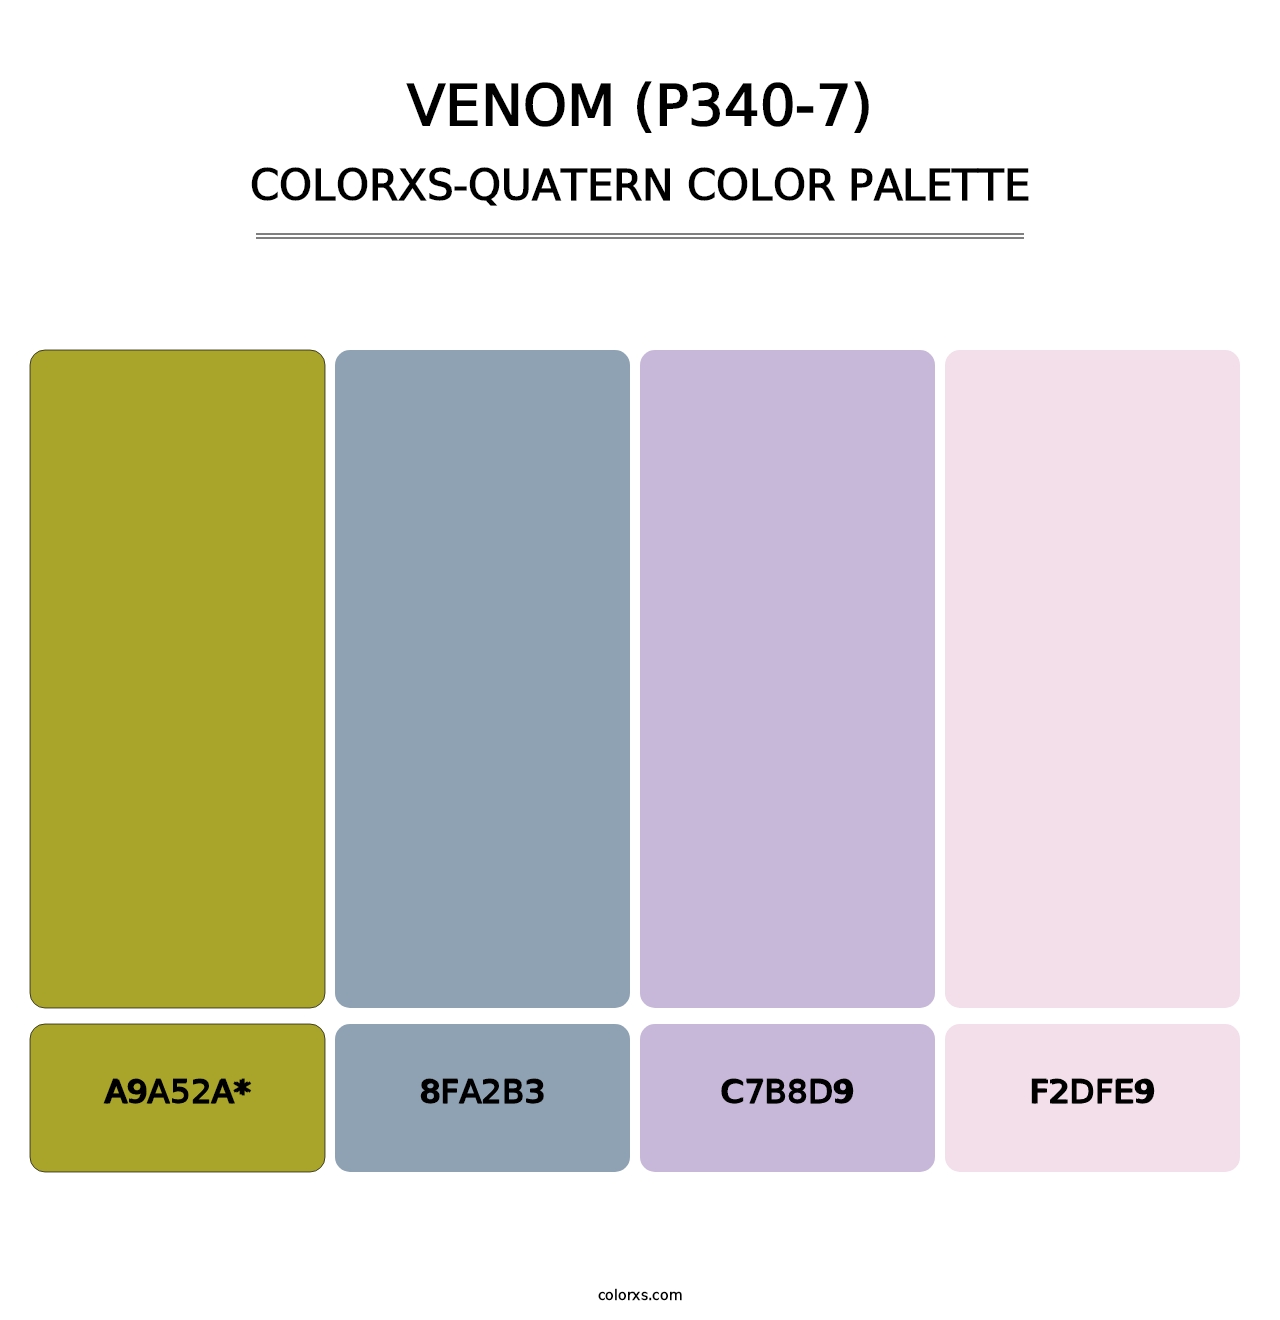 Venom (P340-7) - Colorxs Quatern Palette